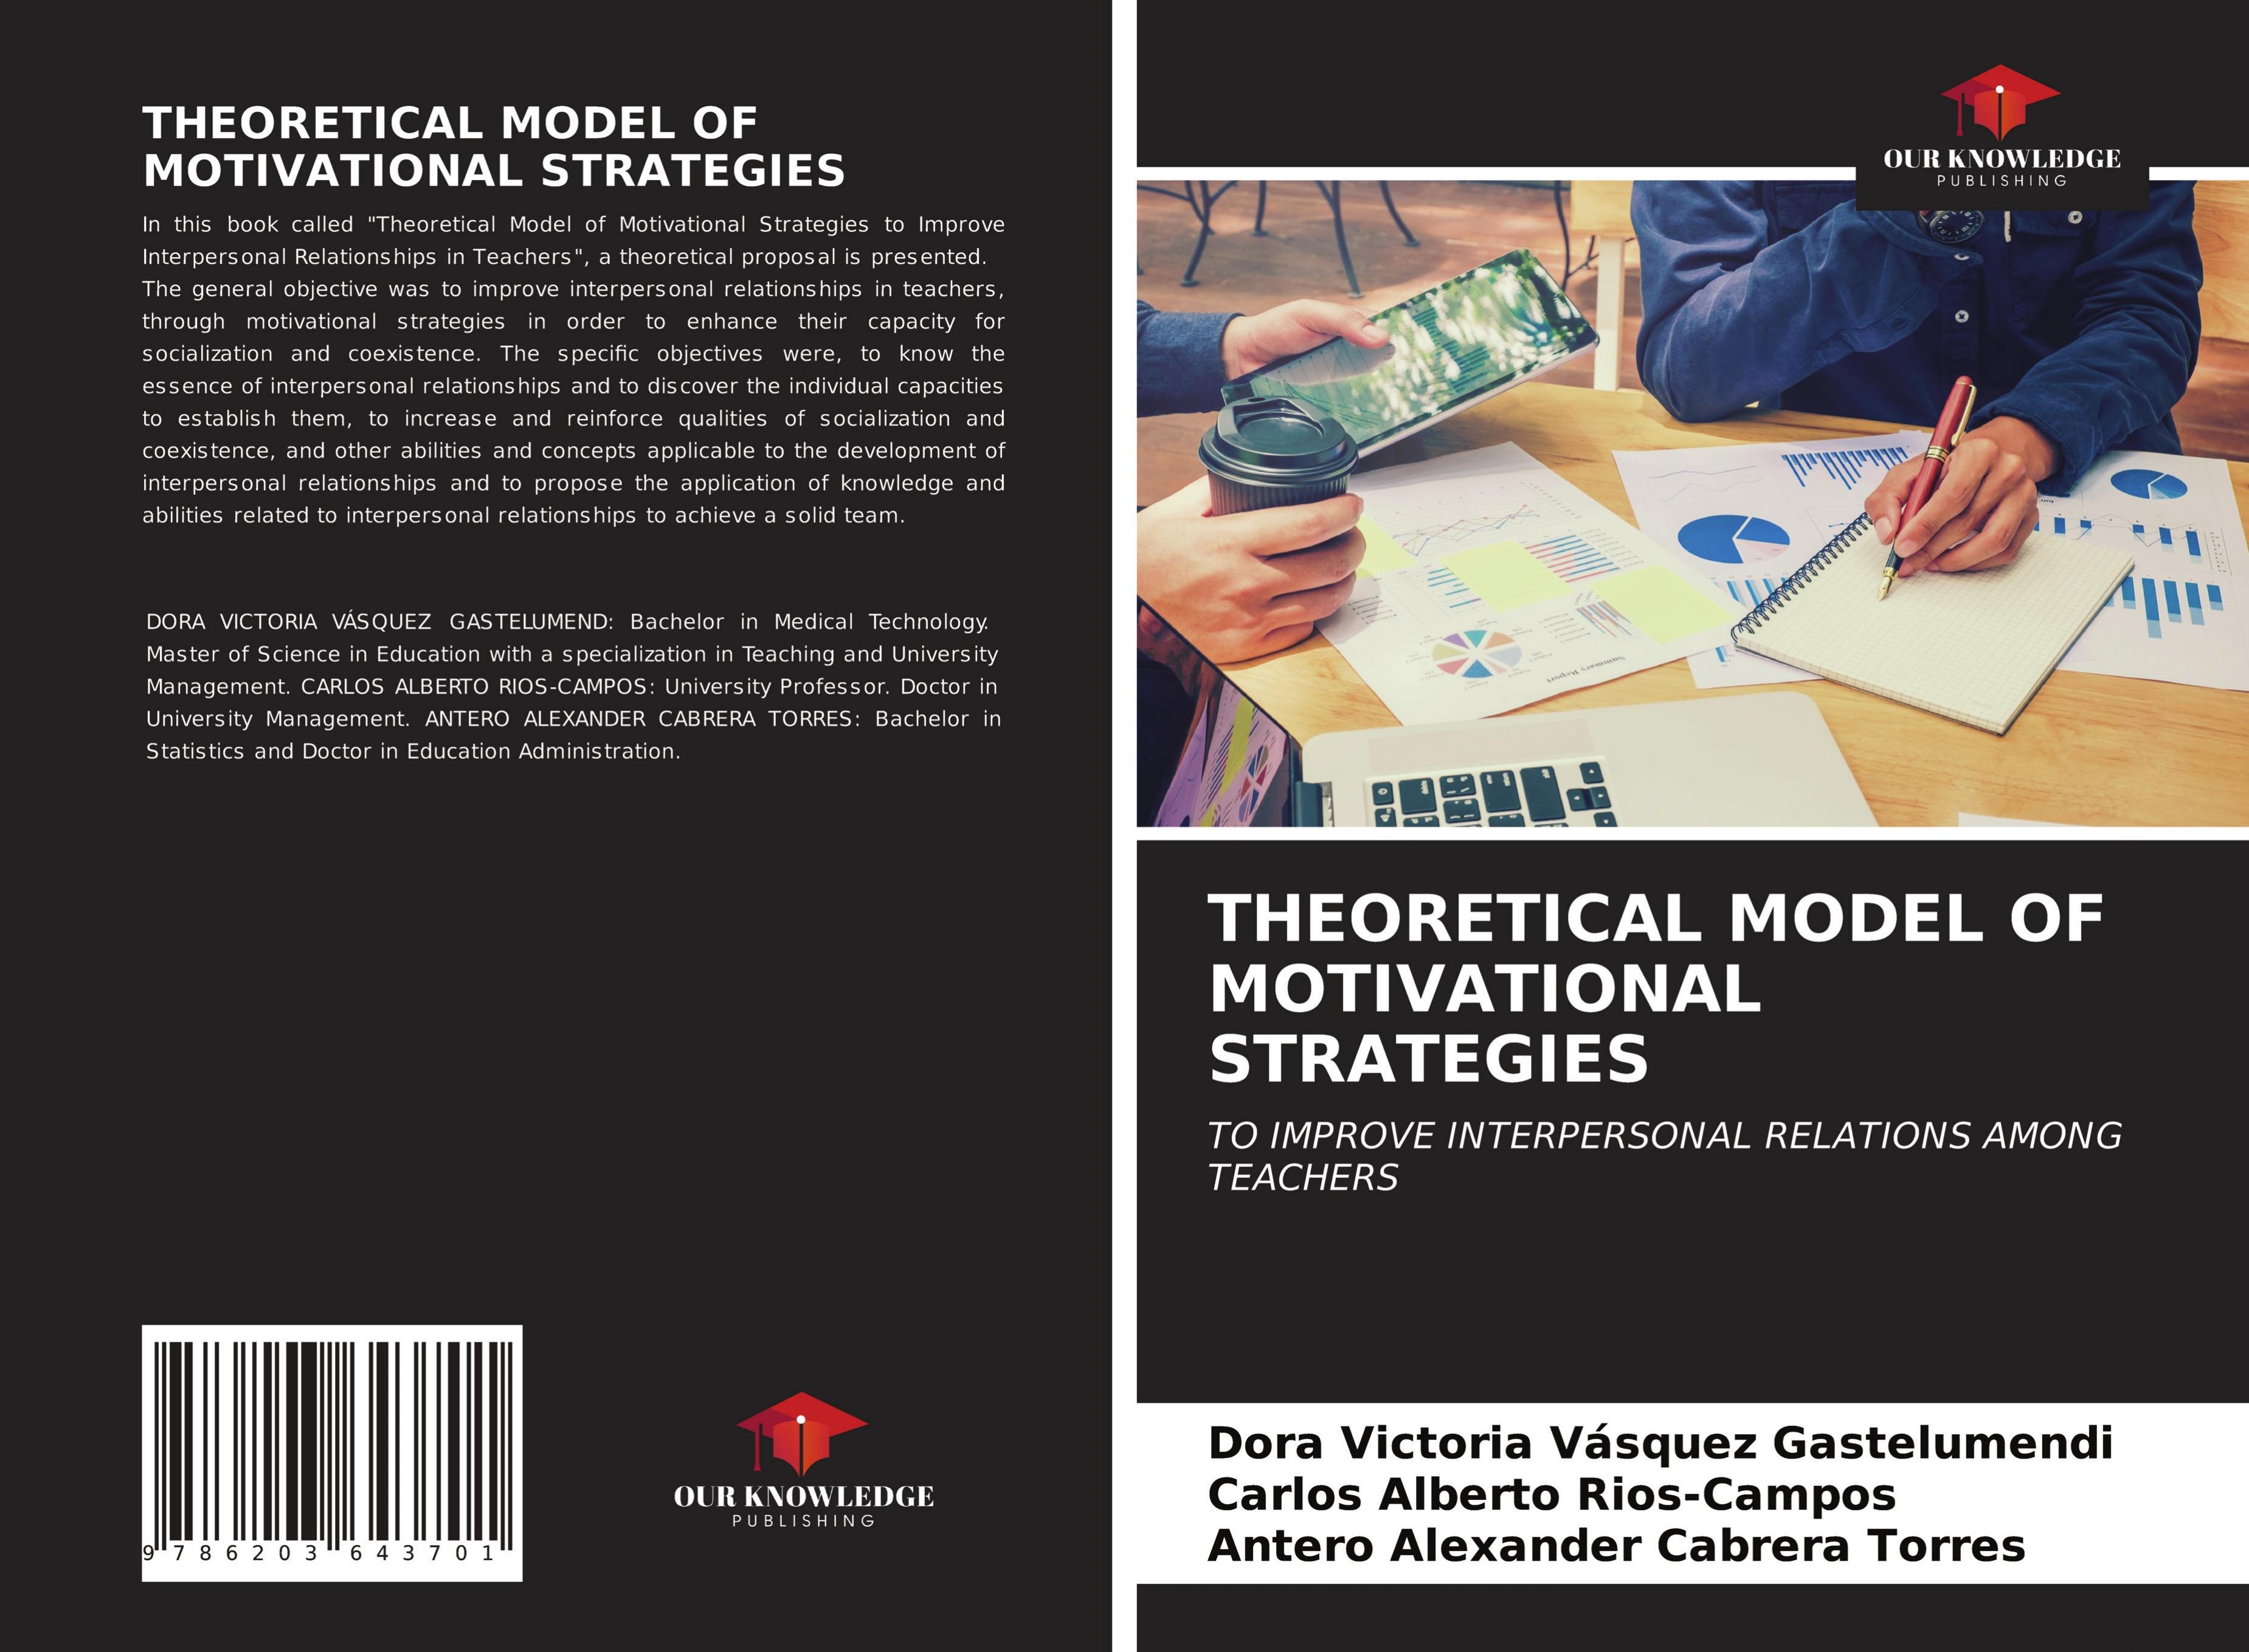 THEORETICAL MODEL OF MOTIVATIONAL STRATEGIES